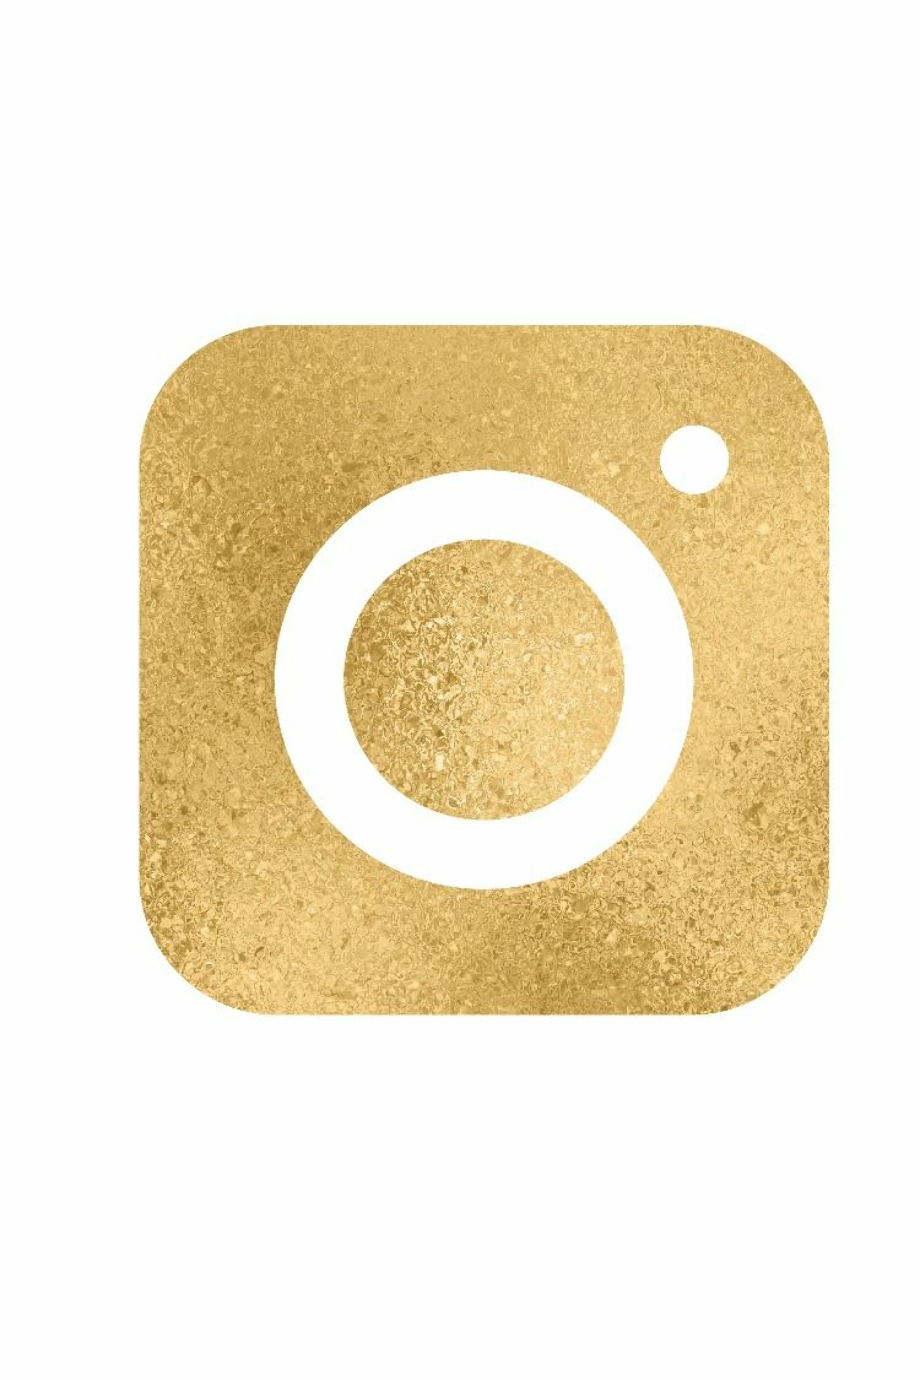 Download High Quality instagram logo vector gold Transparent PNG Images ...